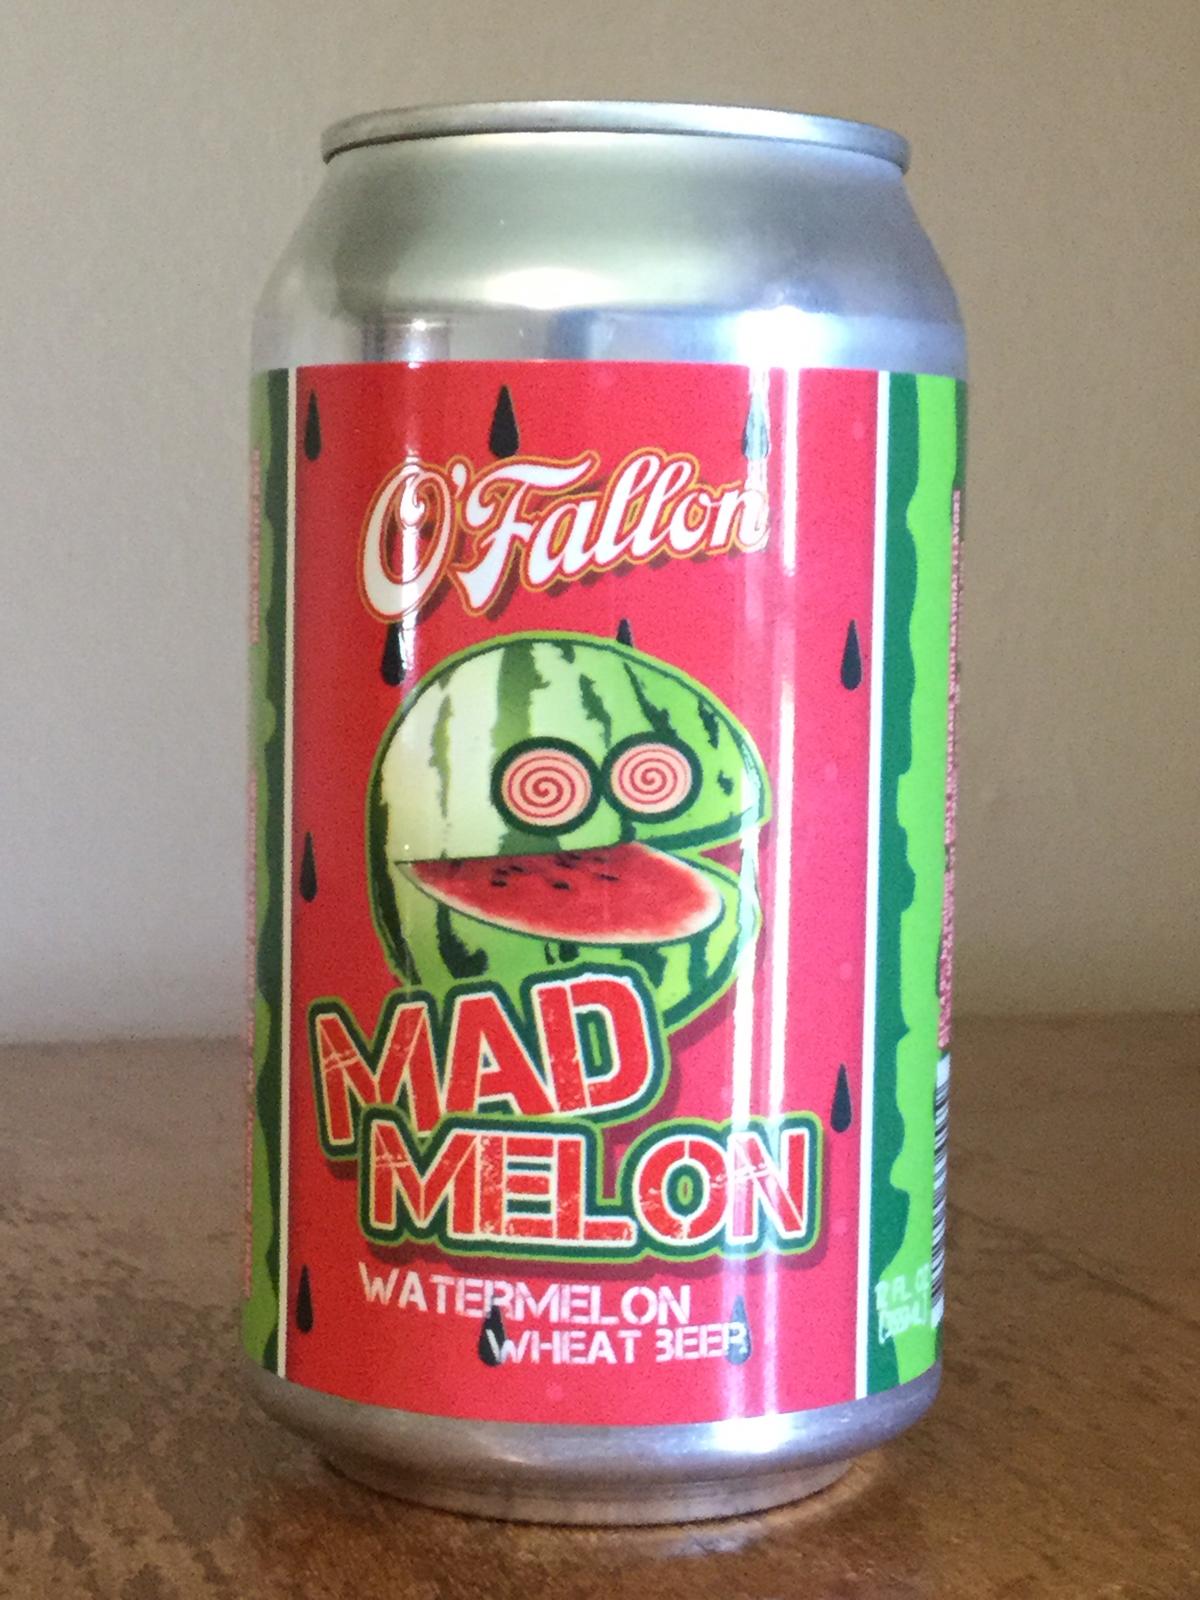 Mad Melon